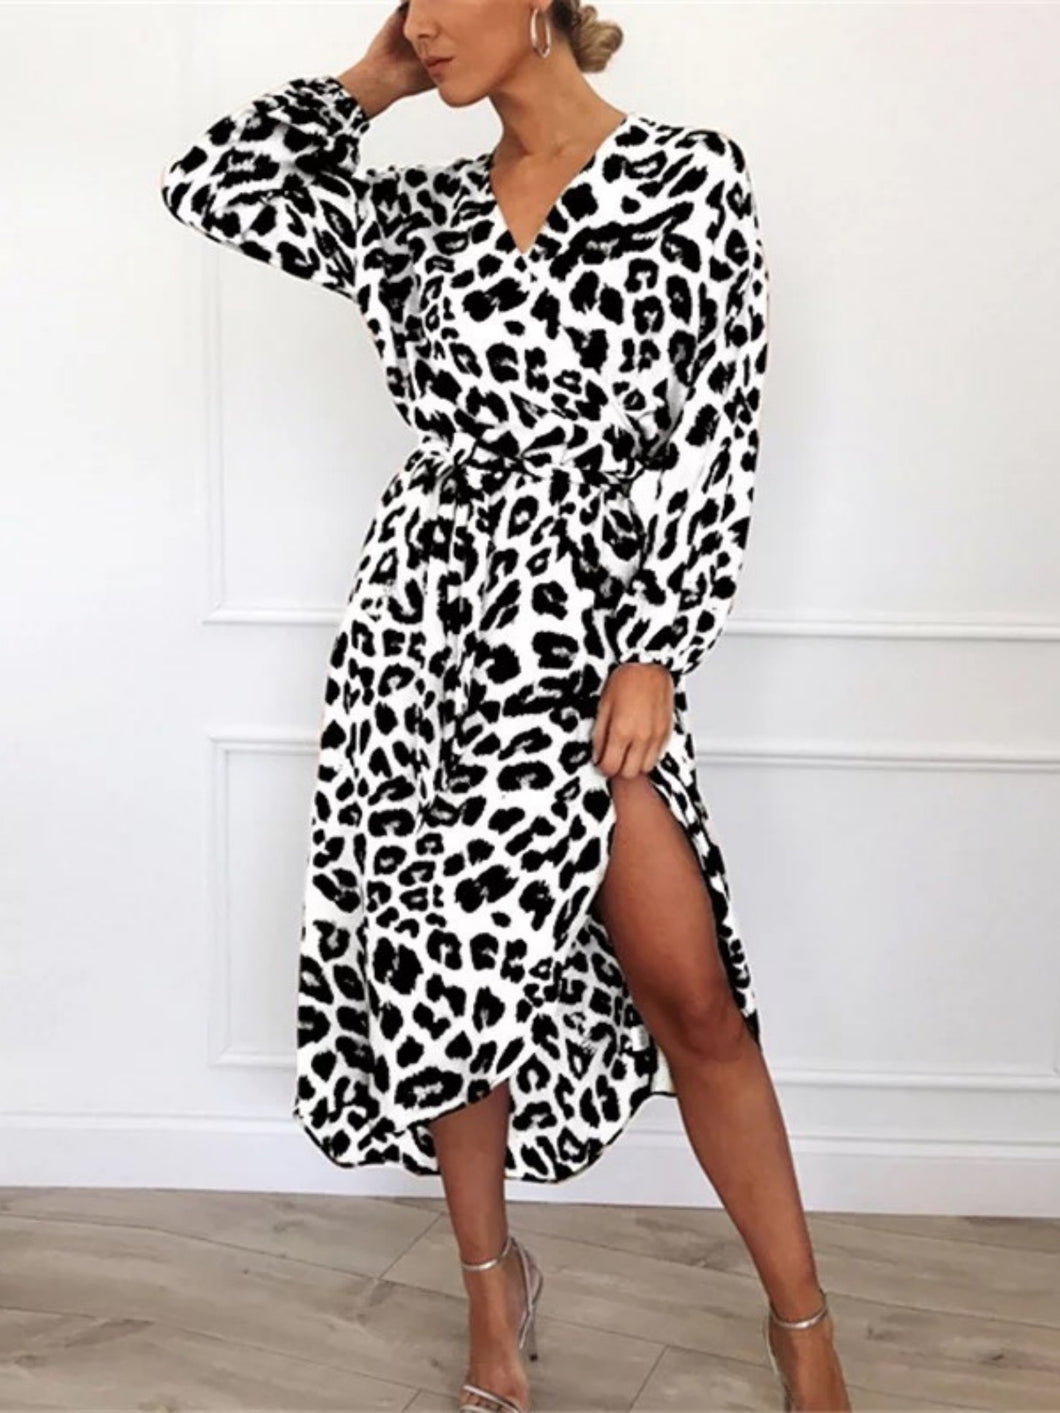 Women Leopard print V-neck high waist heavy chiffon dresses for women (S-XXL) PLUS SIZE